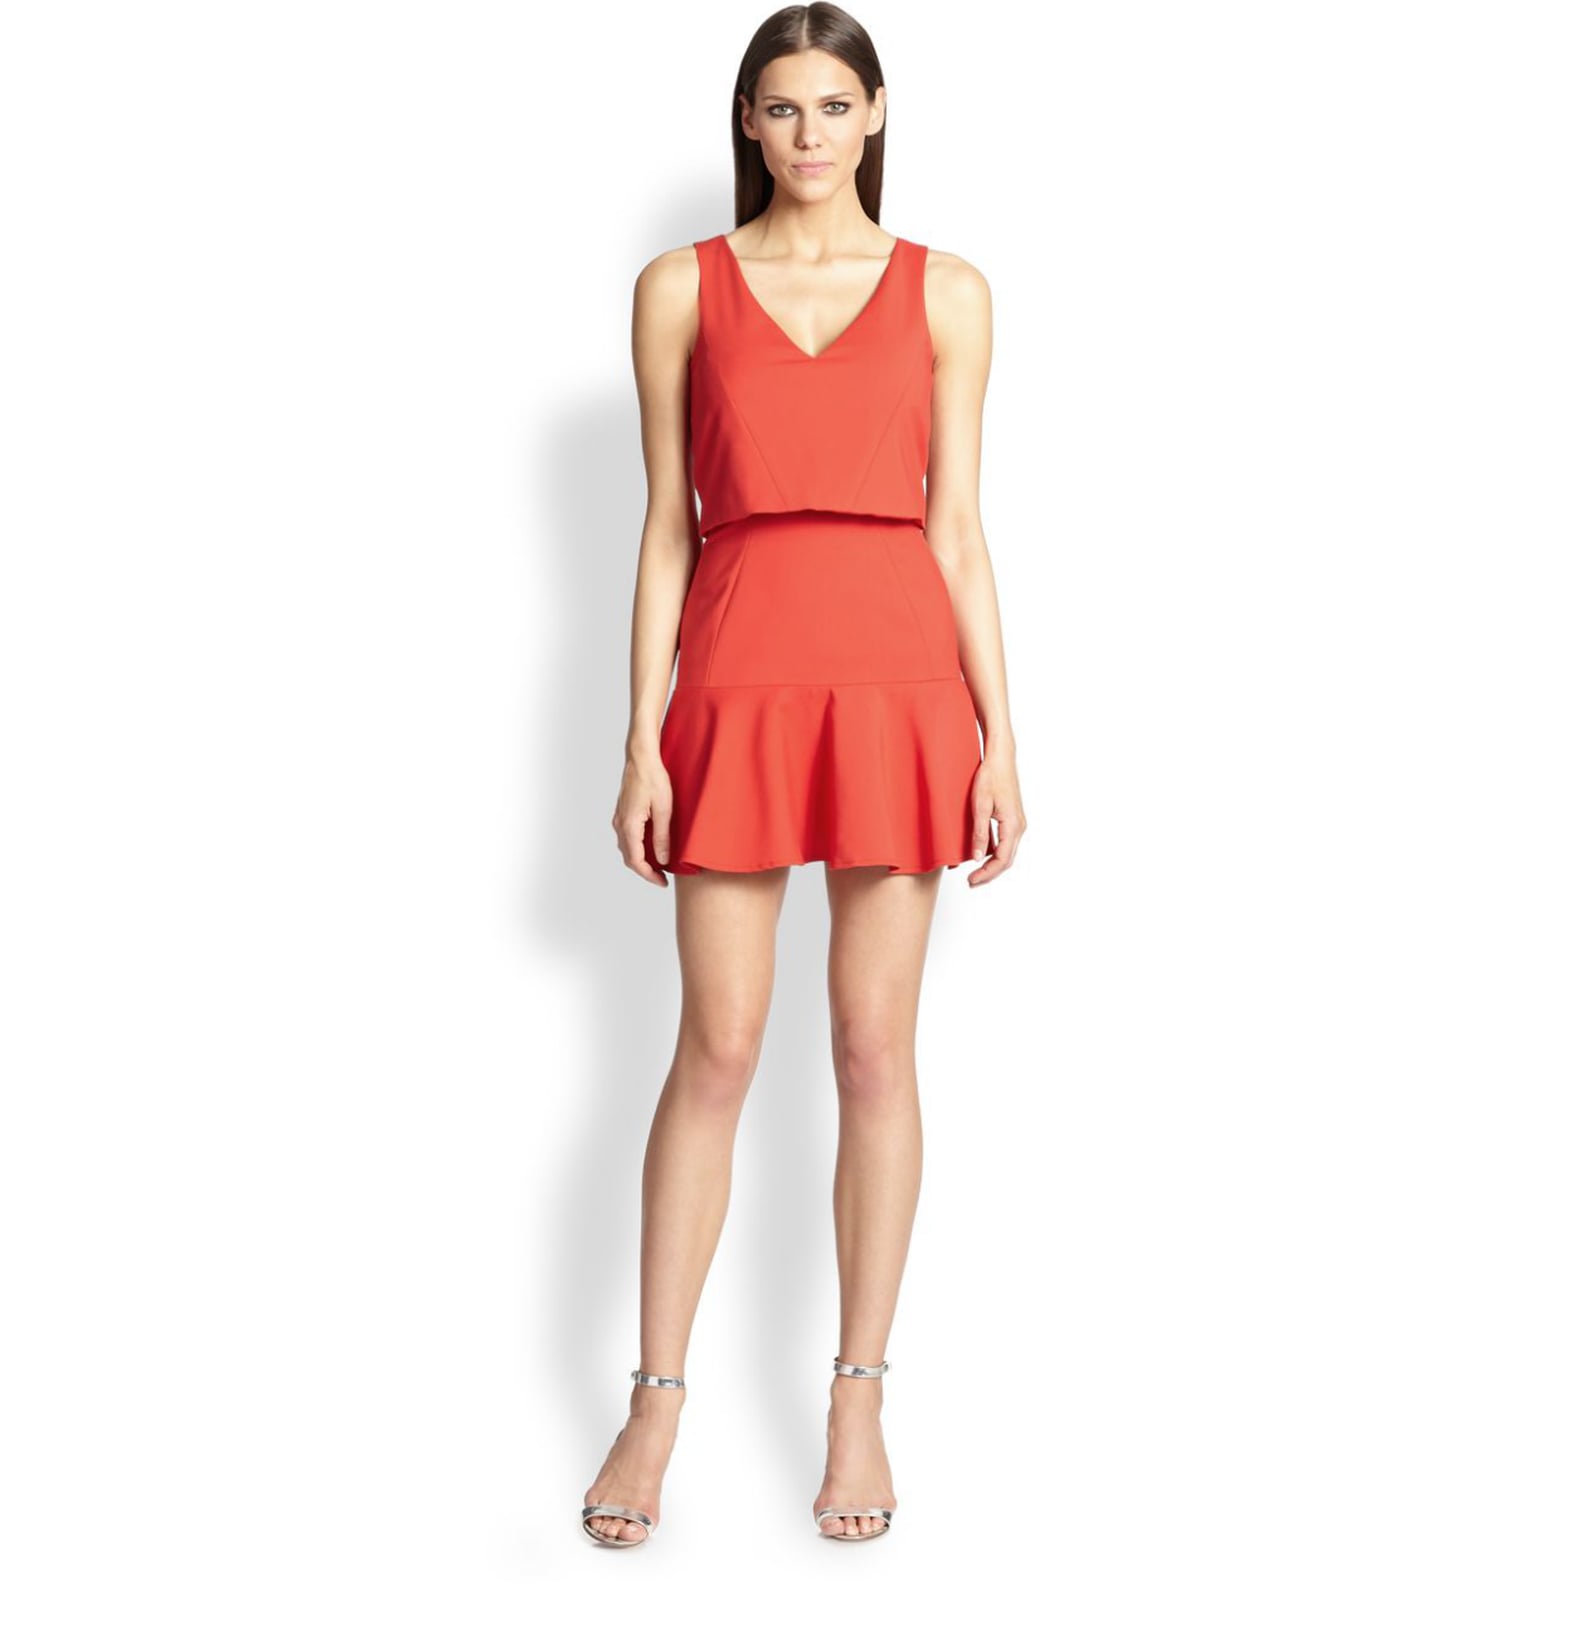 Selena Gomez Fashion Inspiration | Red Party Dresses | POPSUGAR Fashion